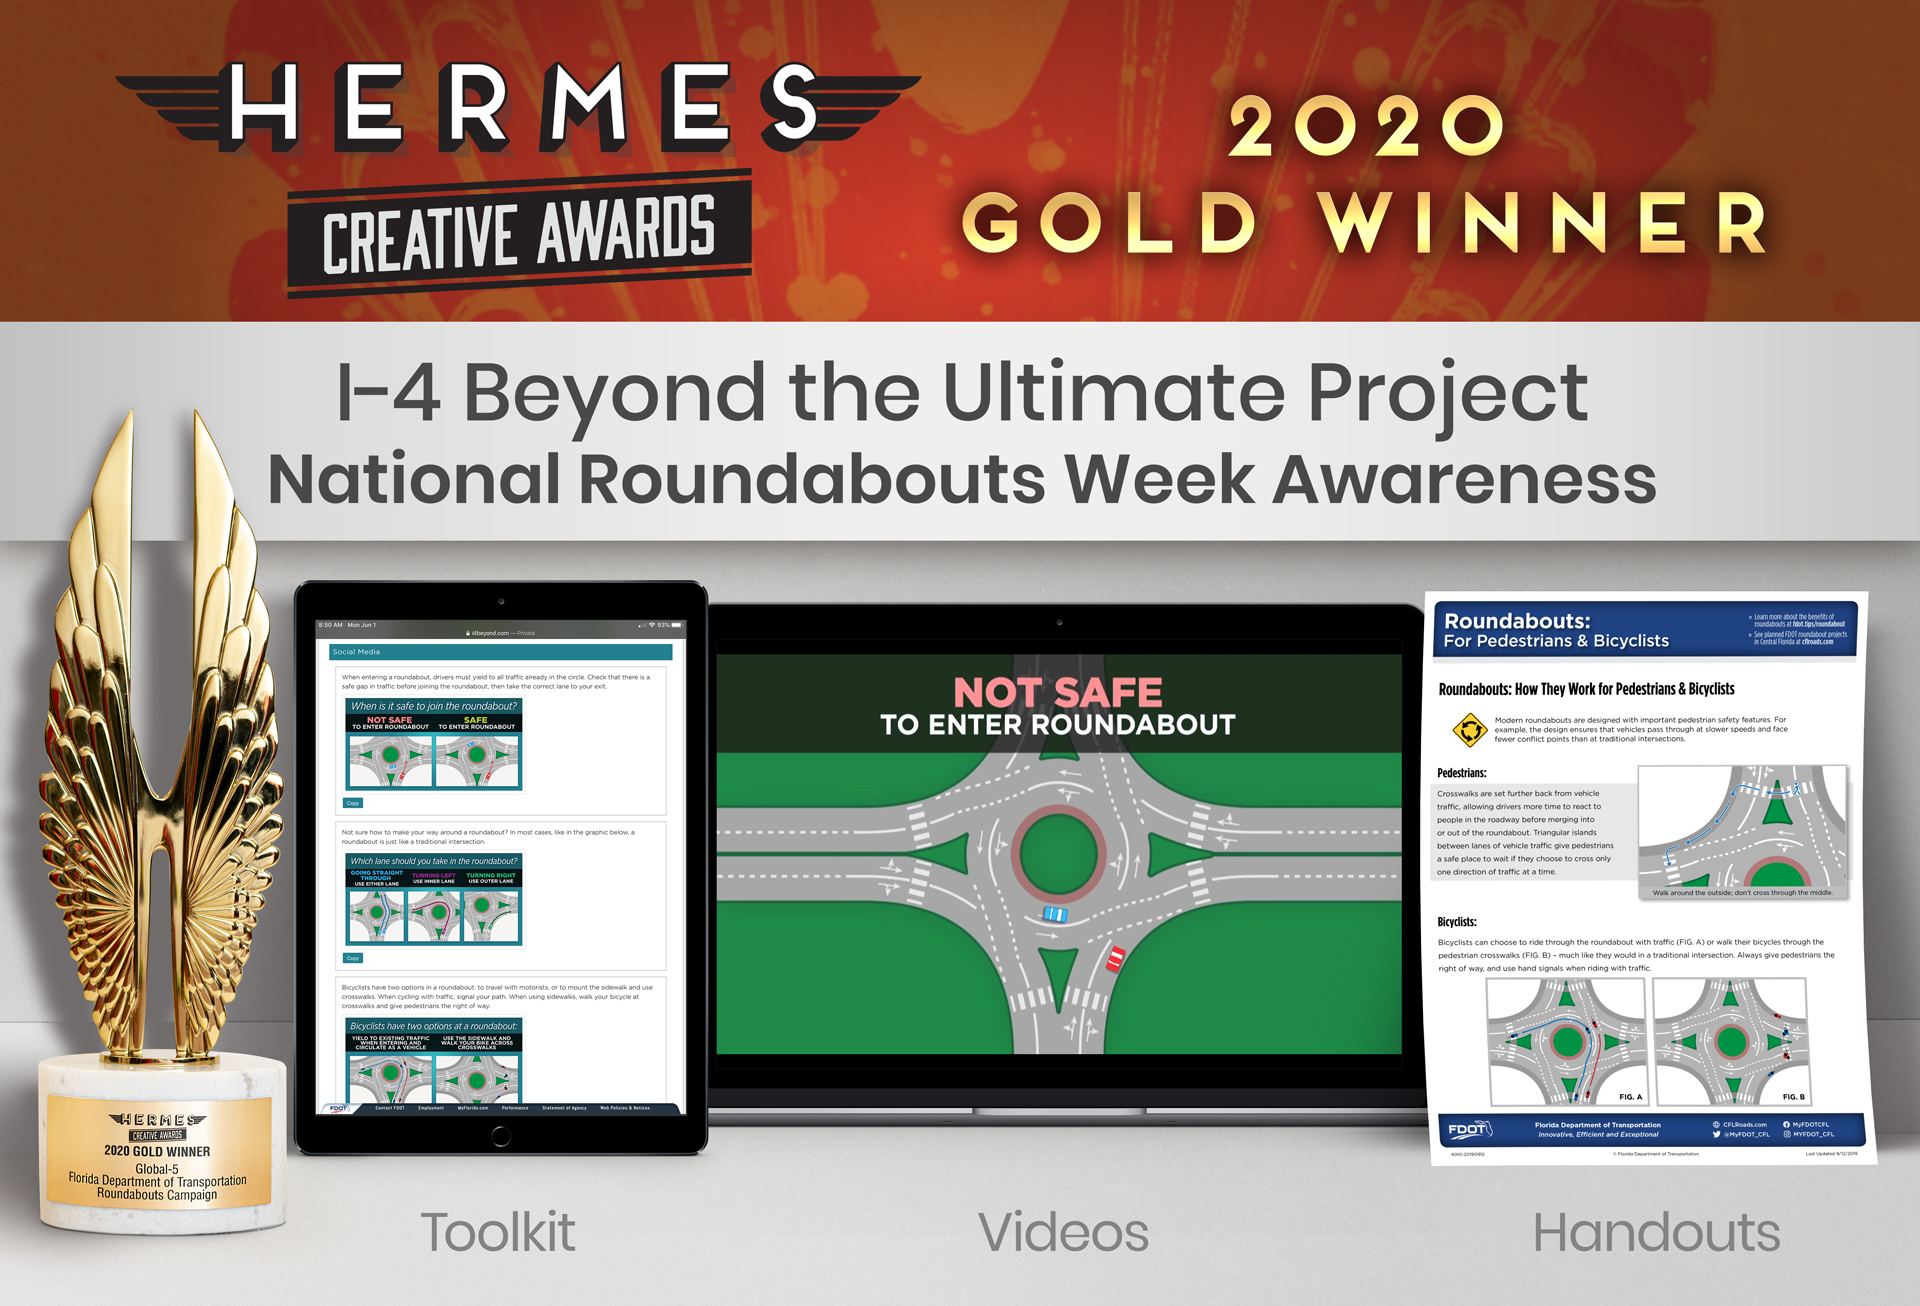 Global-5 Wins A Gold Hermes Creative Award